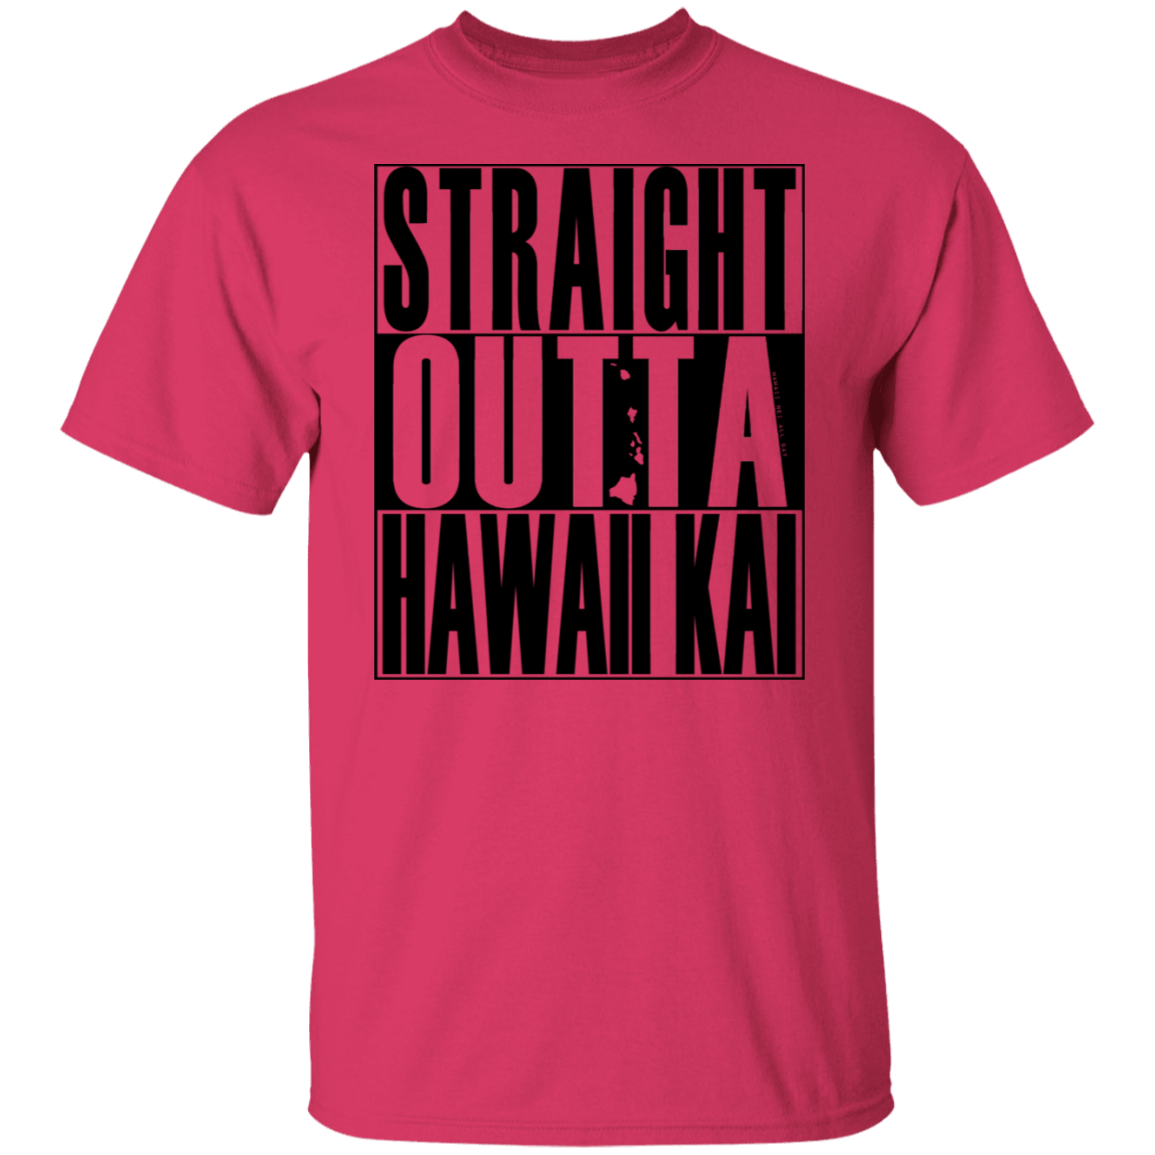 Straight Outta Hawaii Kai (black ink) T-Shirt